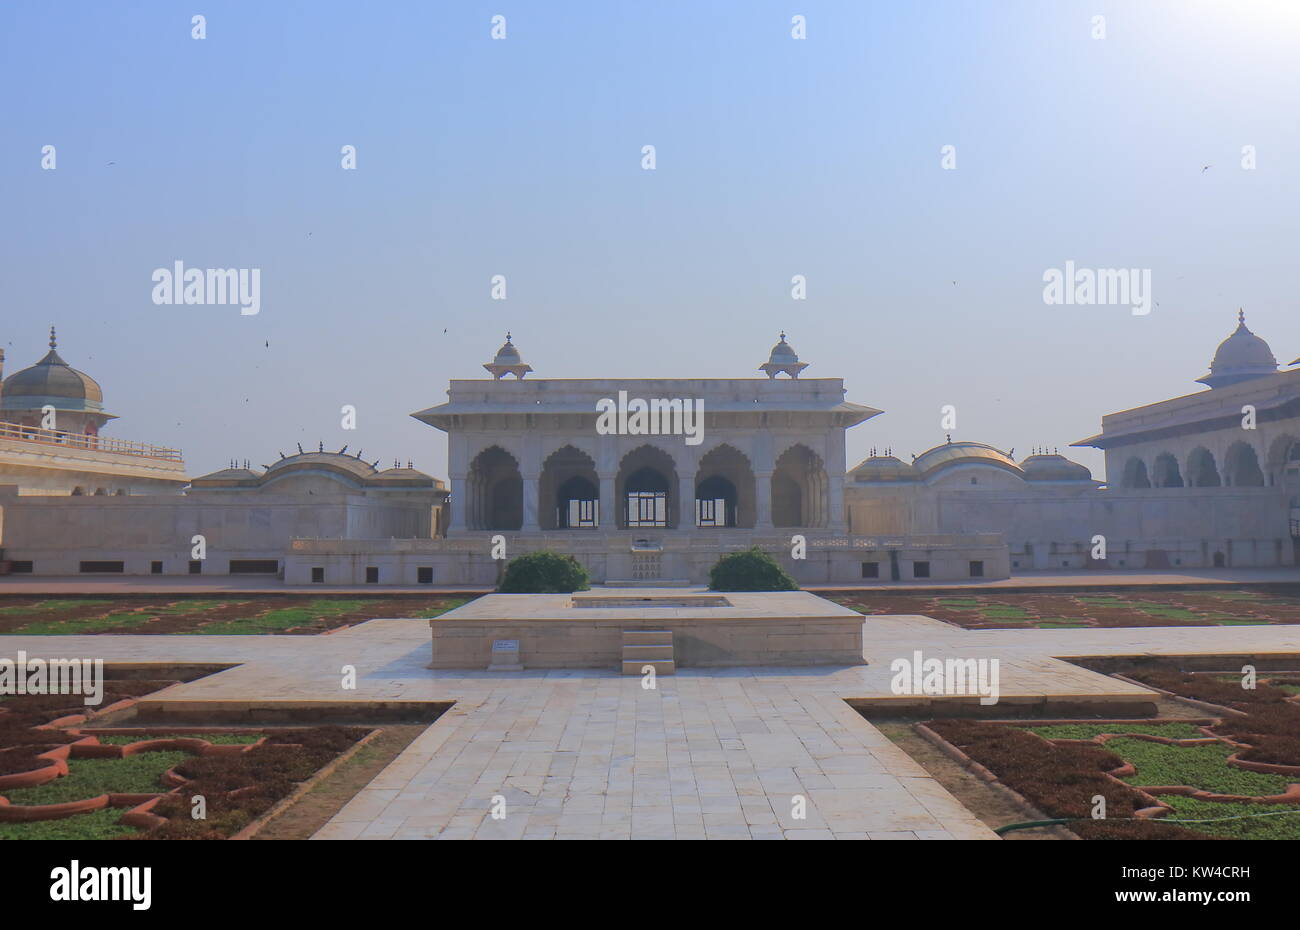 Anguri Bagh jardin architecture historique du fort d'Agra Agra Inde Banque D'Images